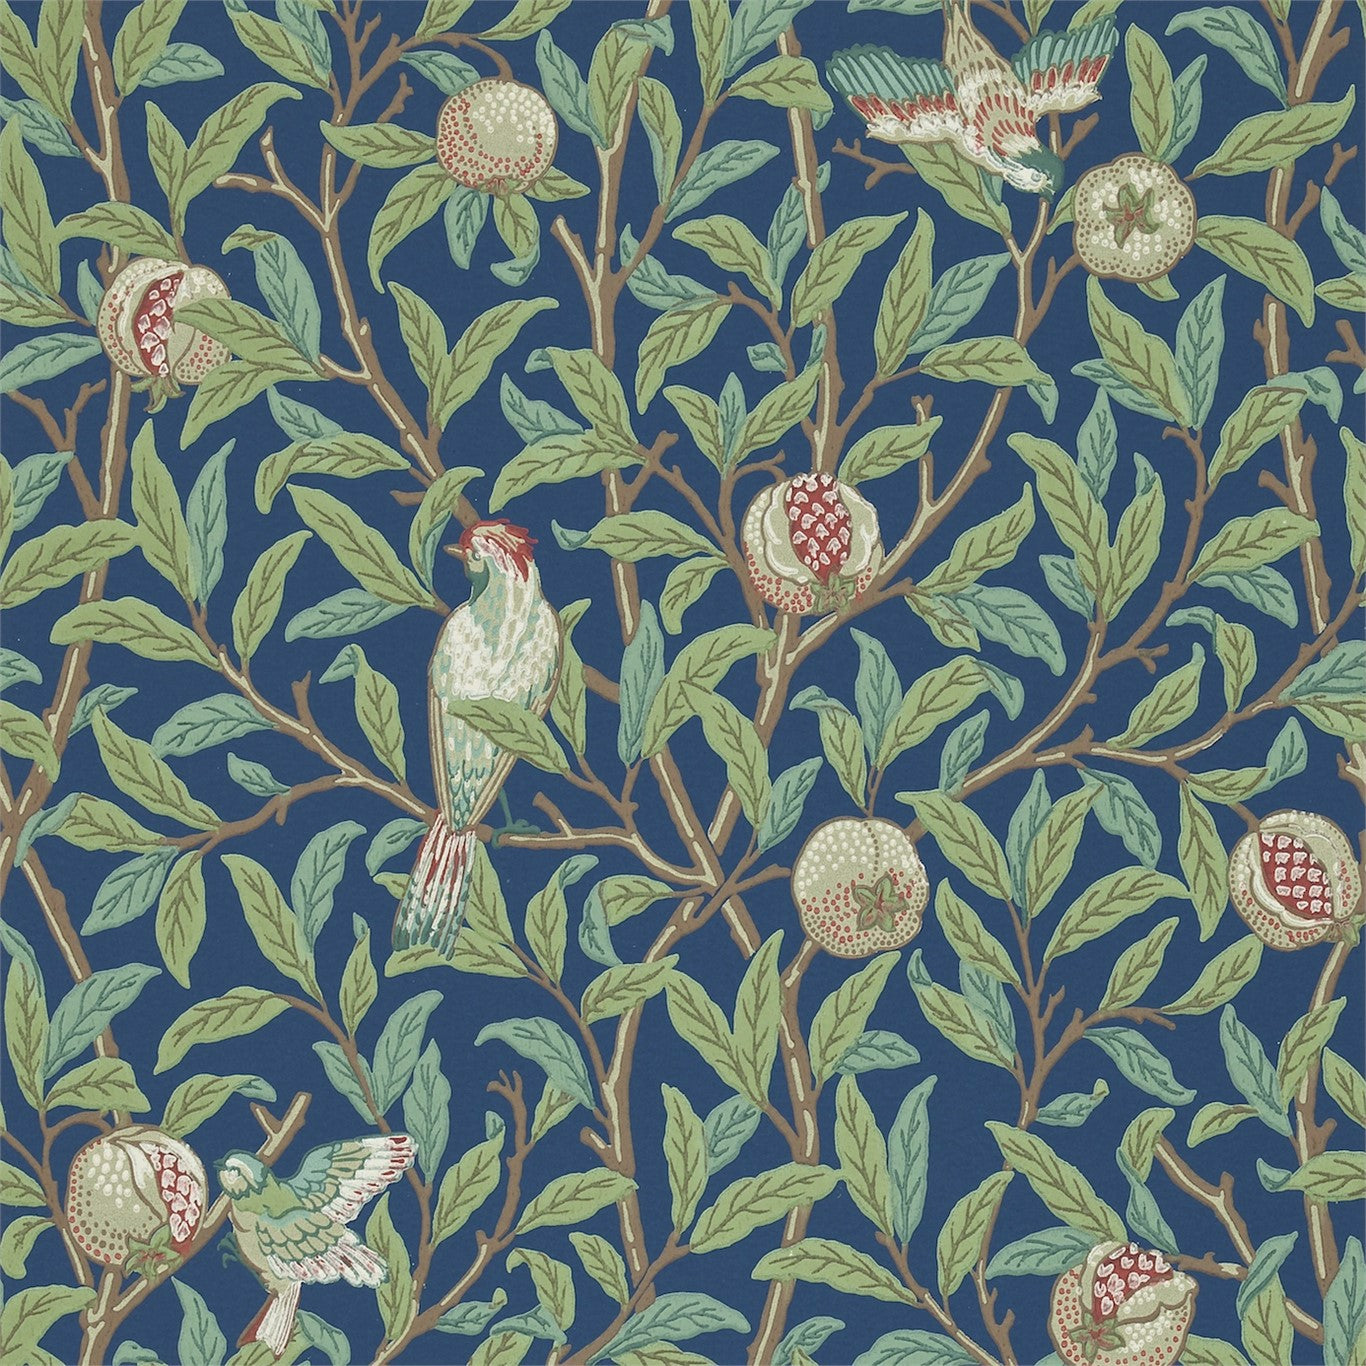 Bird & Pomegranate Blue/Sage Wallpaper DMCR216454 by Morris & Co